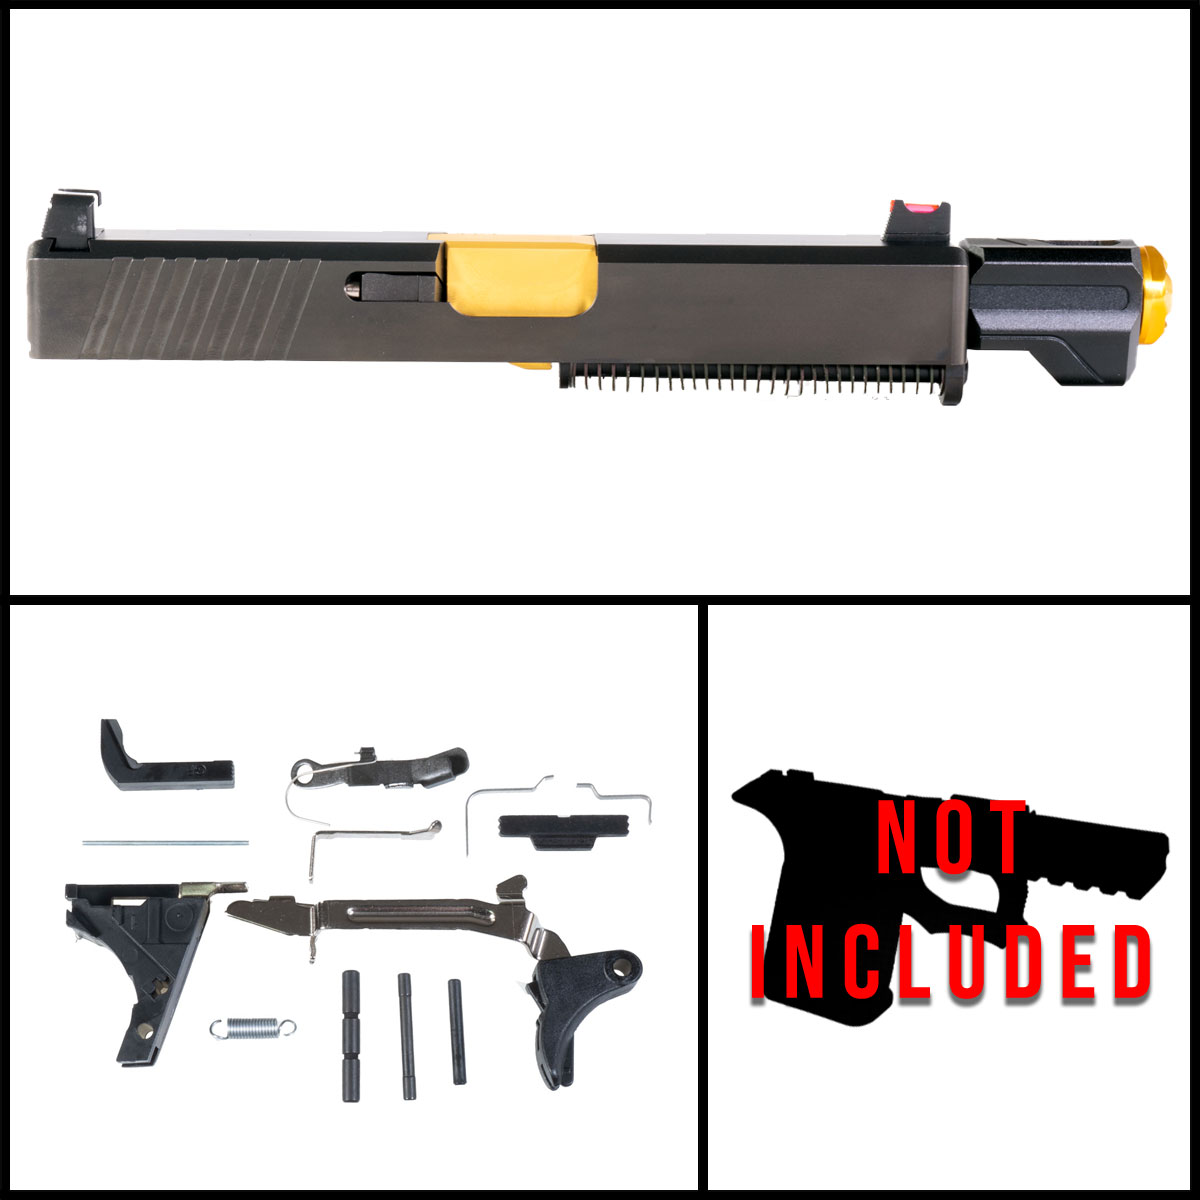 OTD 'Geschoss w/ Tyrant Designs Compensator' 9mm Full Pistol Build Kit (Everything Minus Frame) - Glock 19 Gen 1-3 Compatible